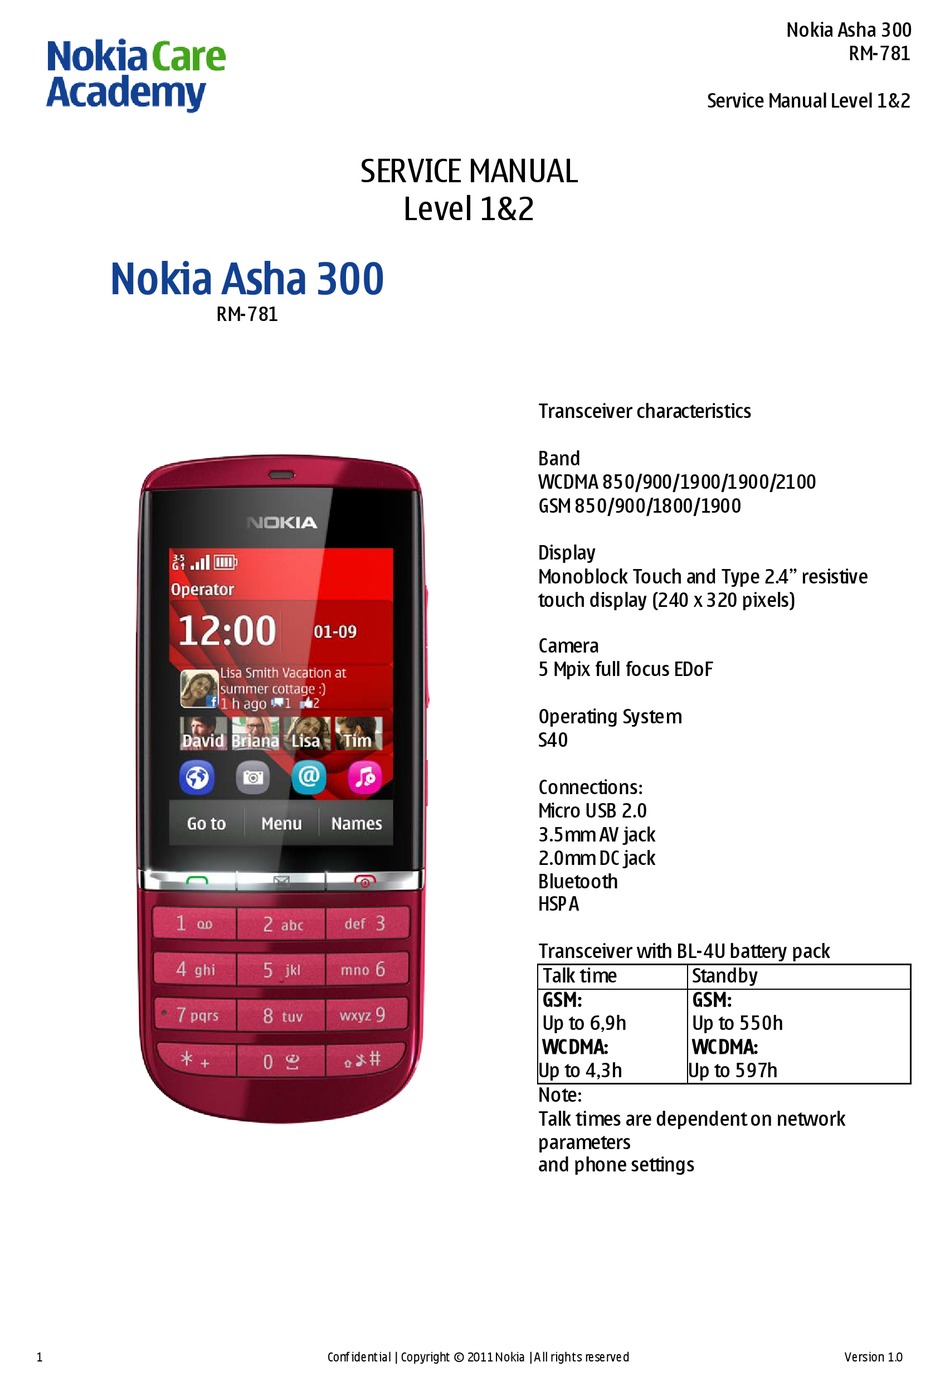 Nokia Asha 300 Service Manual Pdf Download Manualslib